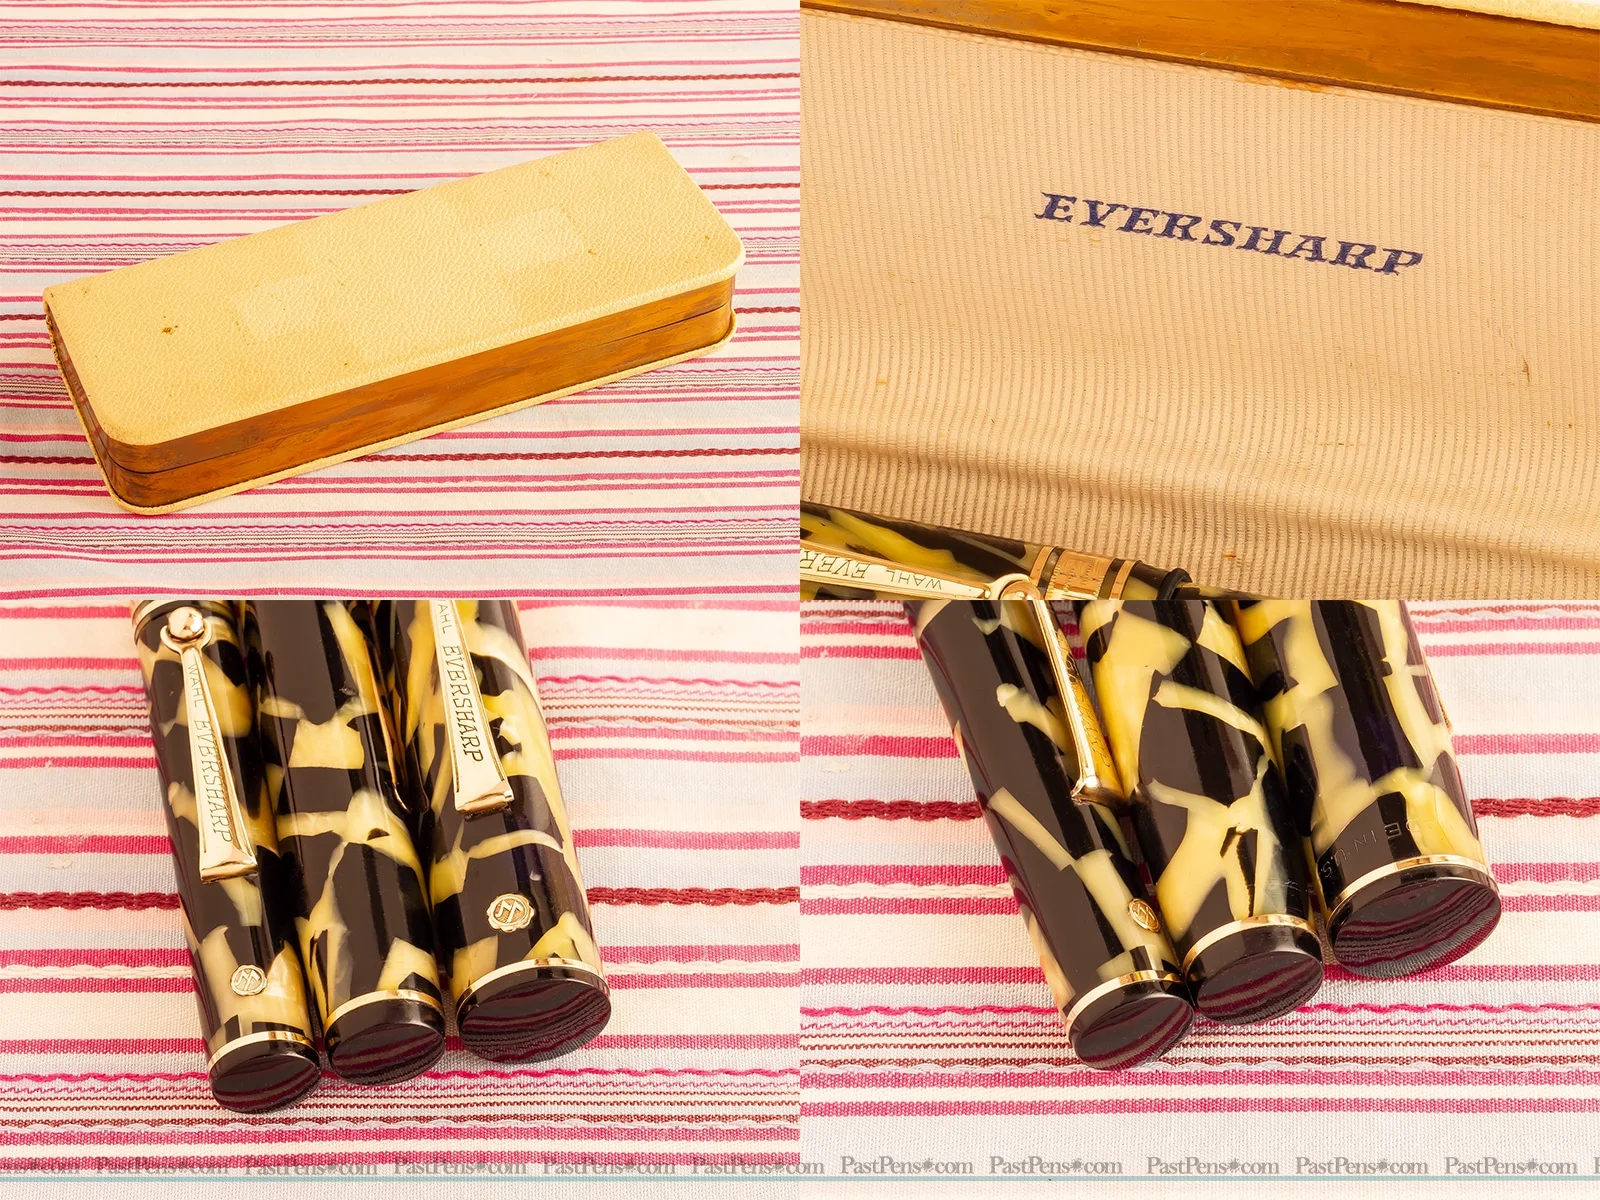 eversharp gold seal emblem senior pen box set